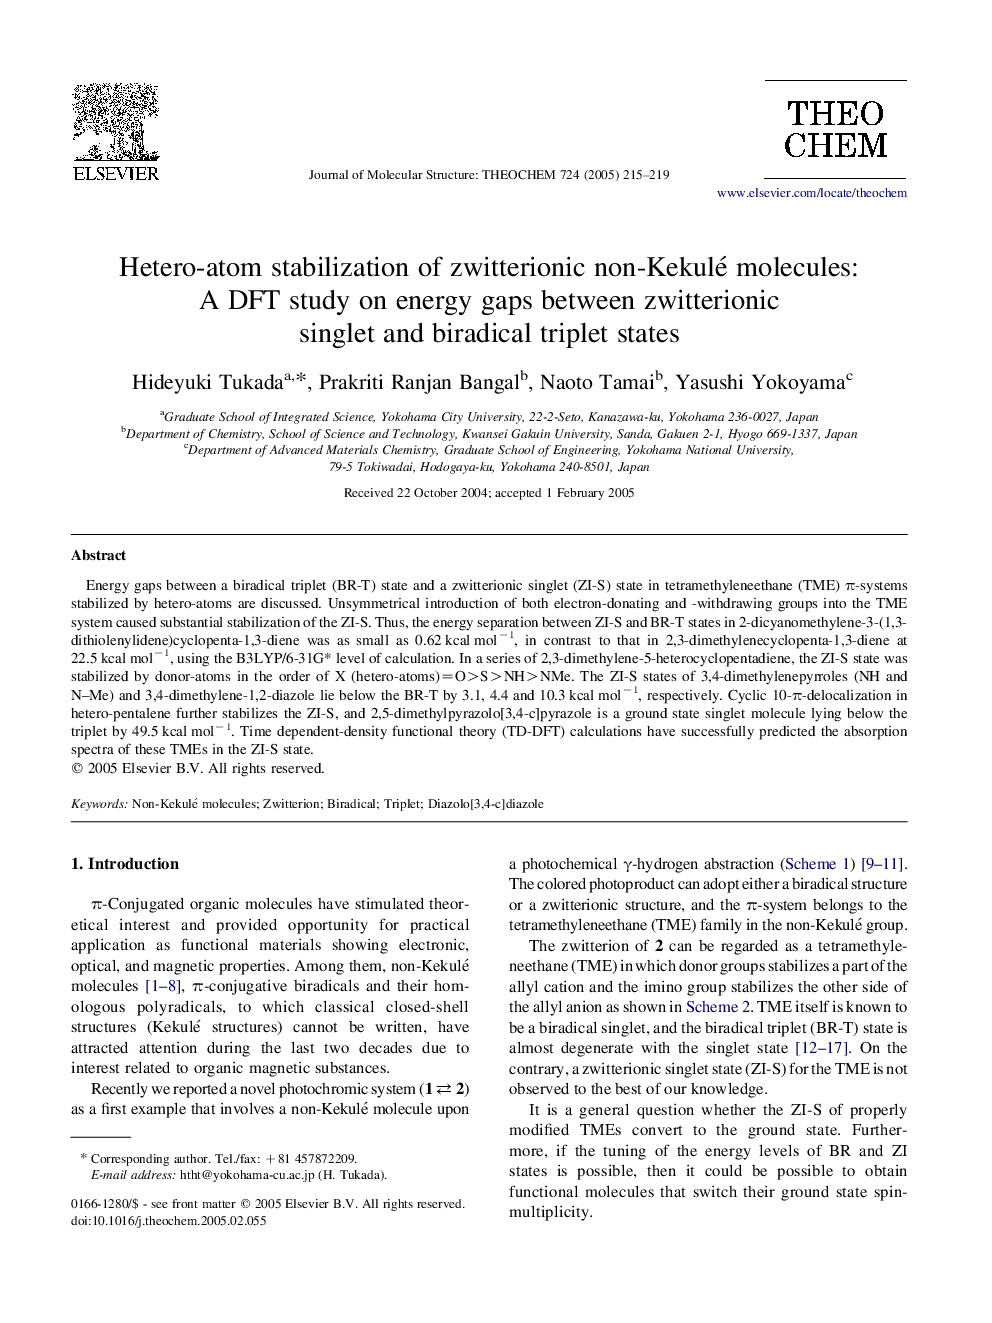 Hetero-atom stabilization of zwitterionic non-Kekulé molecules: A DFT study on energy gaps between zwitterionic singlet and biradical triplet states